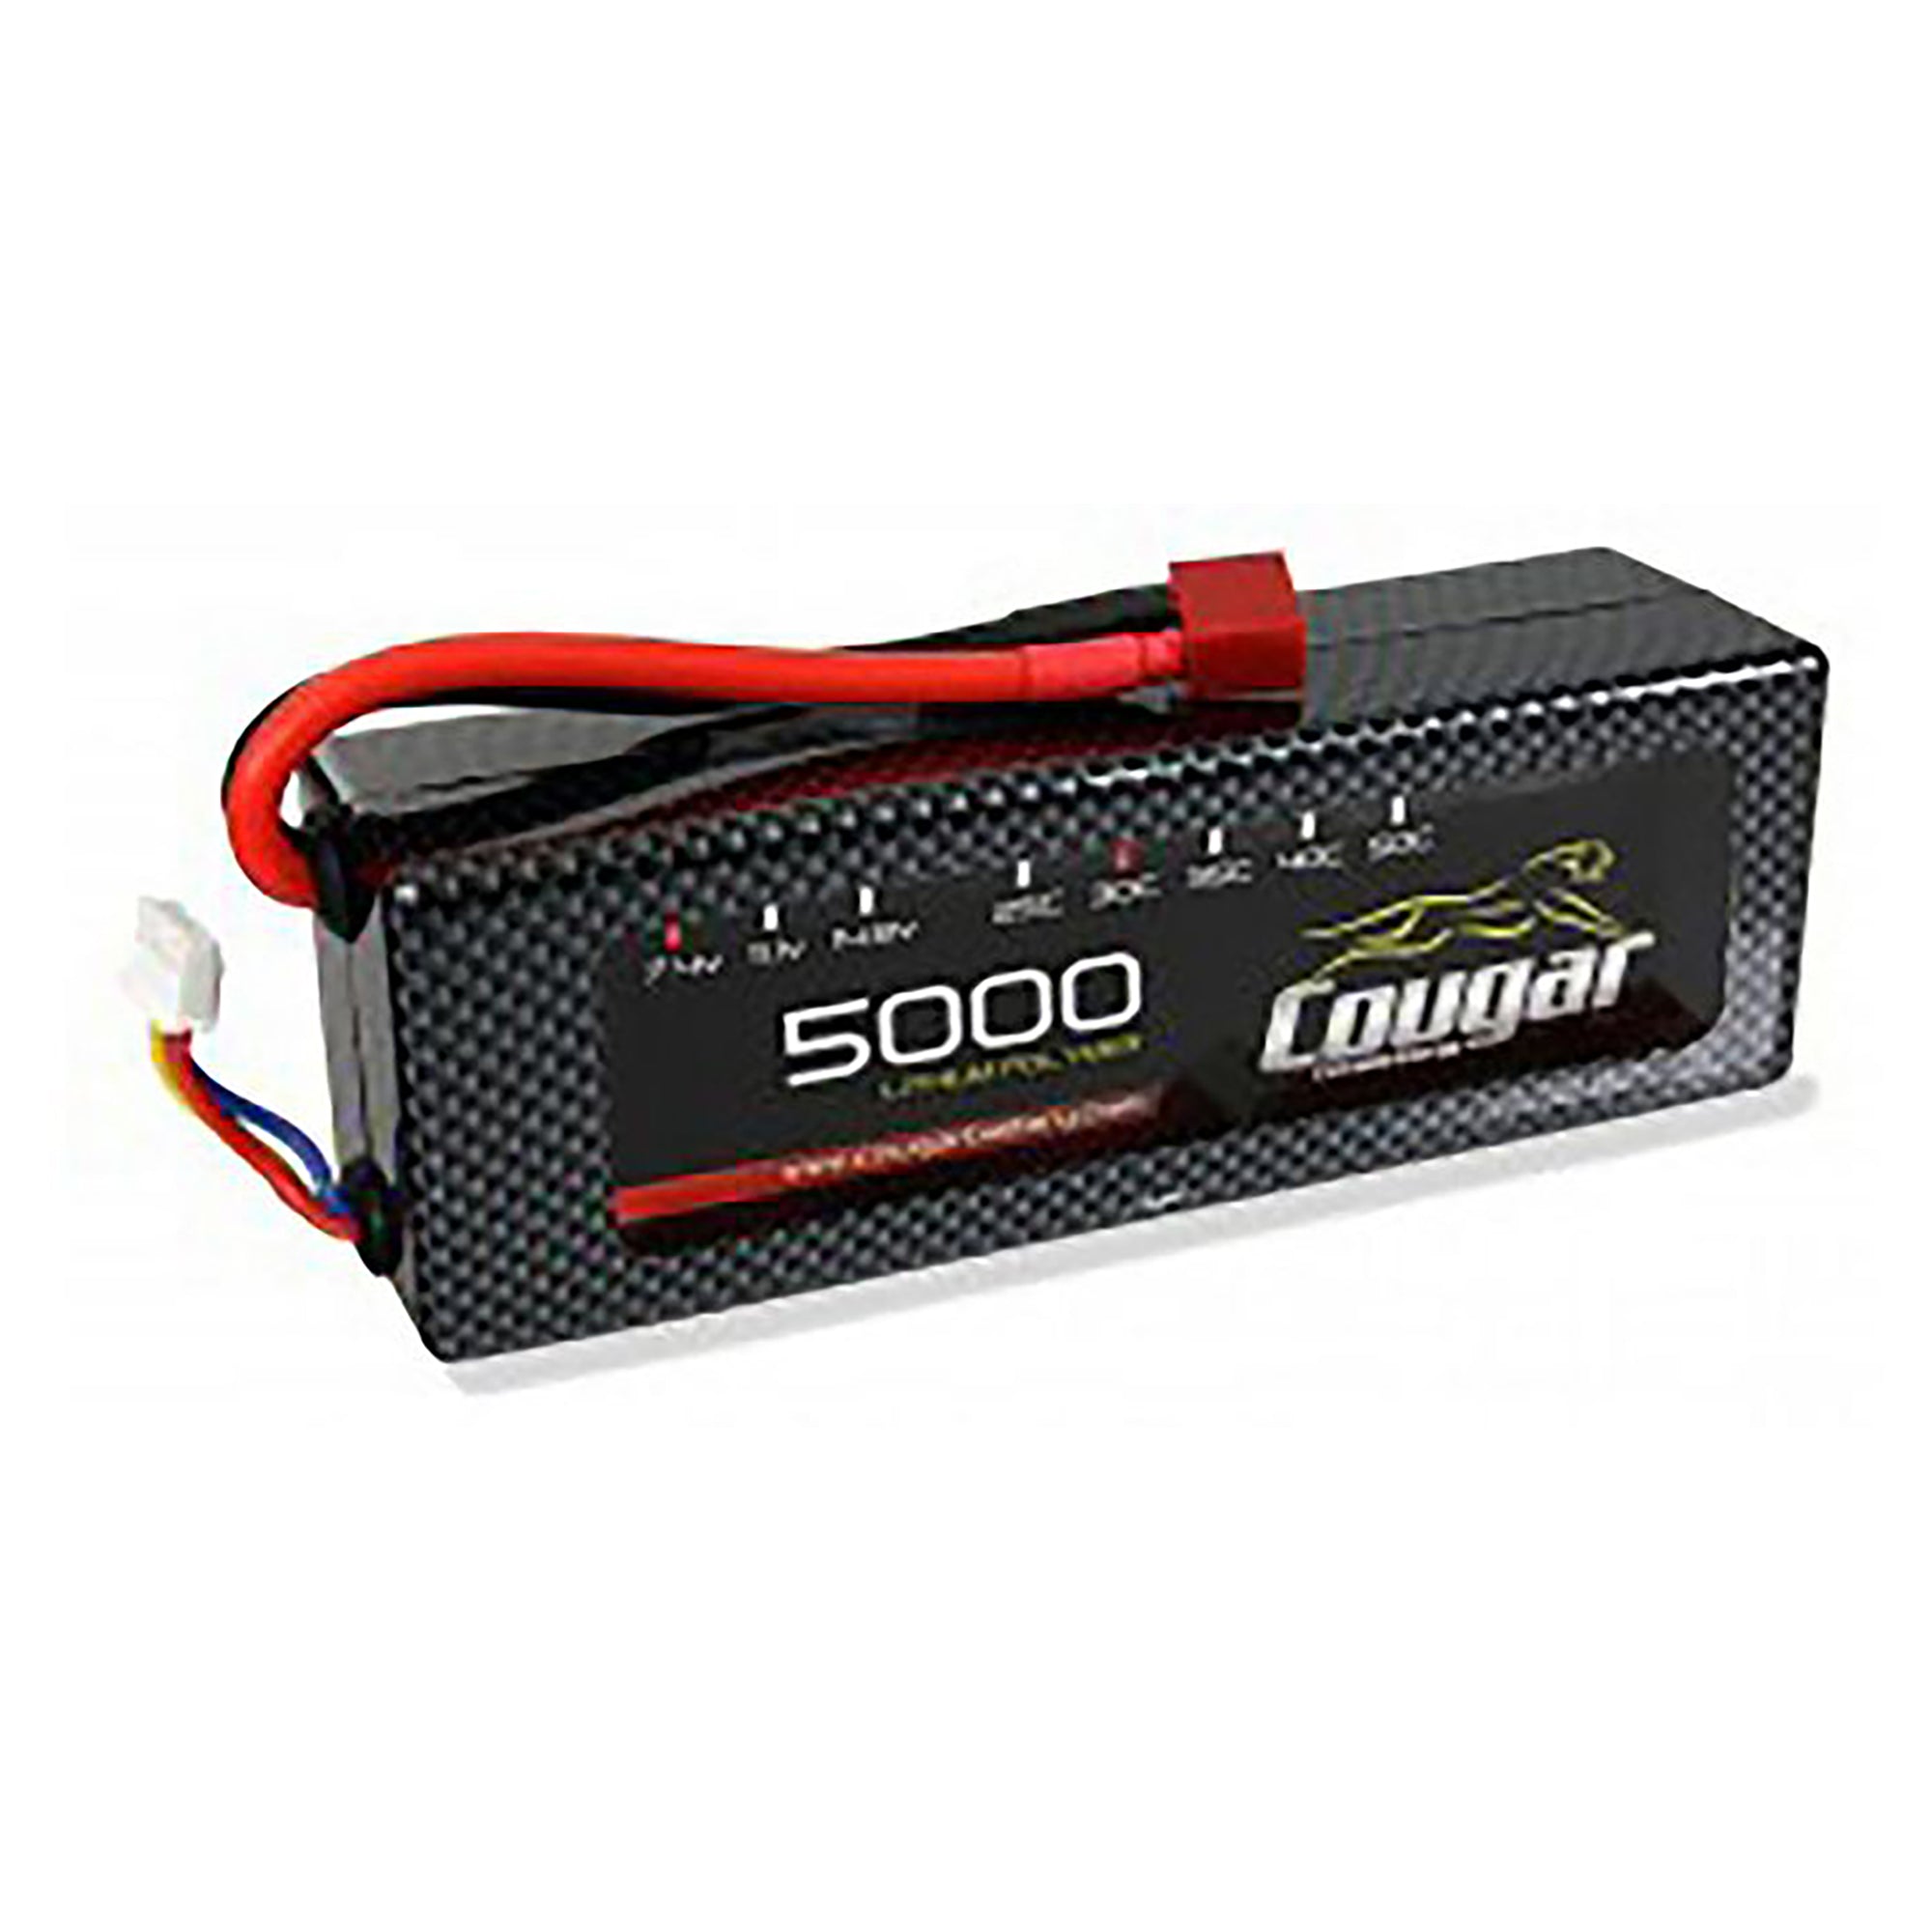 Cougar 5200mAh 7.4v 2S 30C Soft Case LiPo Battery